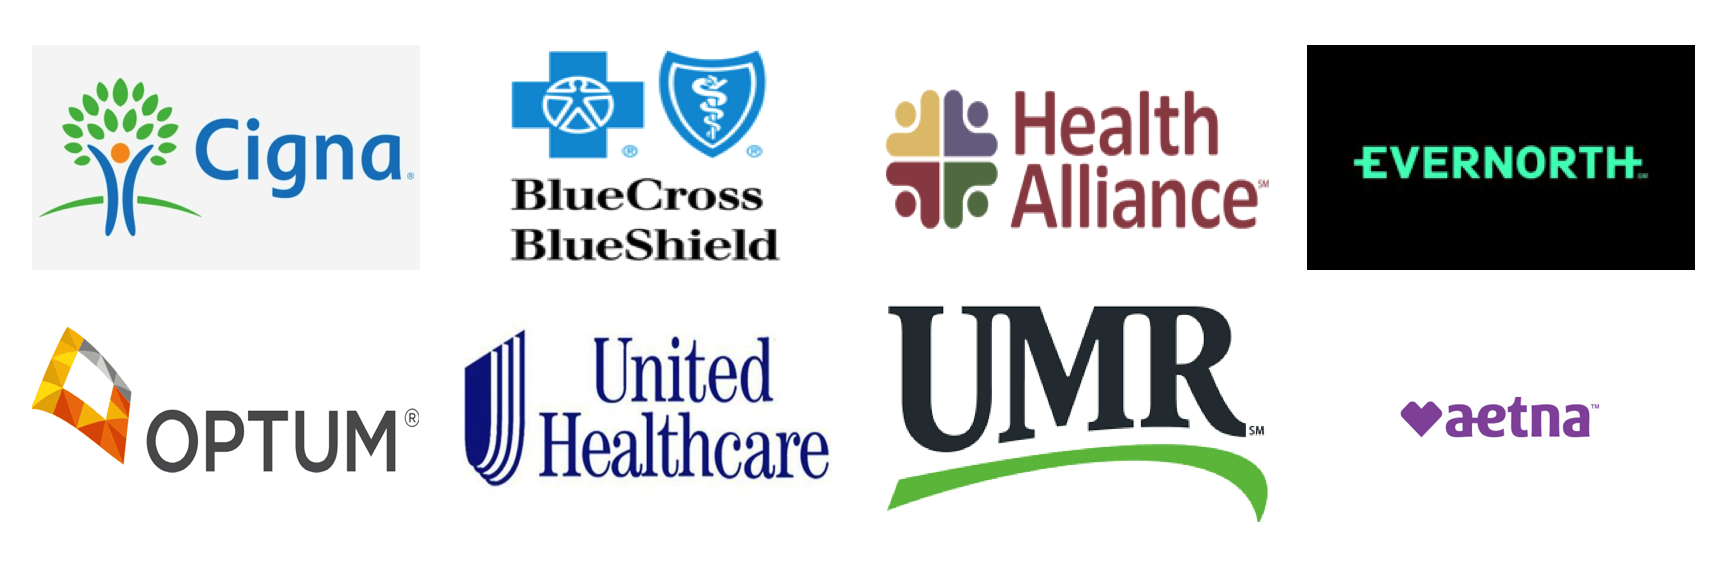 insurance, cigna, blue cross, bcbs, health alliance, evernorth, optum, uhc, united healthcare, umr, aetna